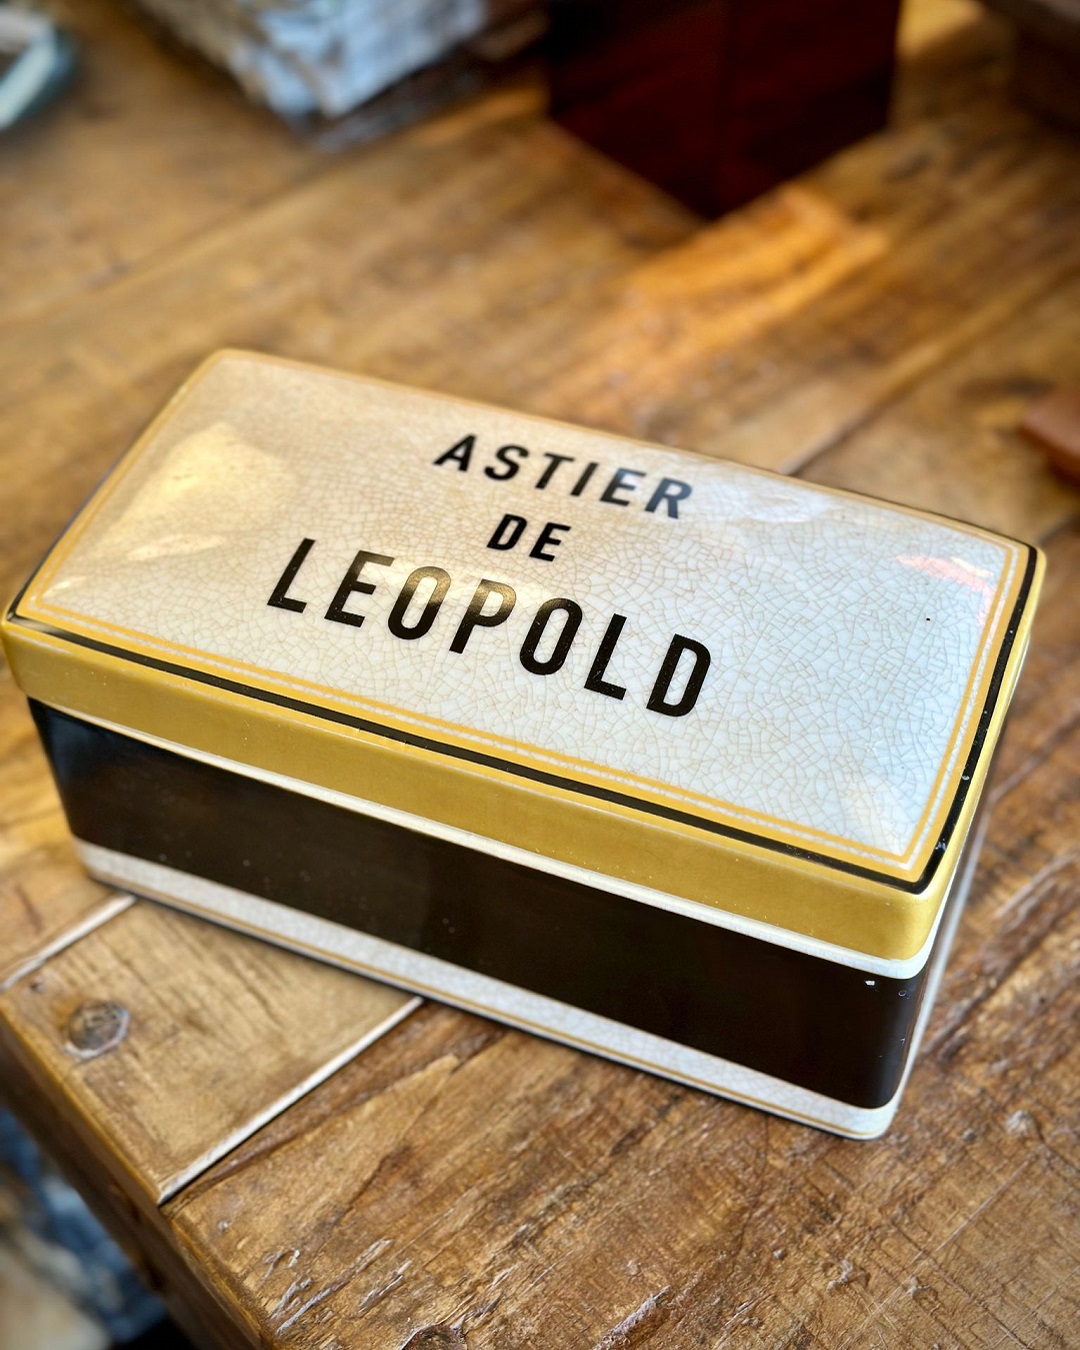 Astier de leopald box on wooden table